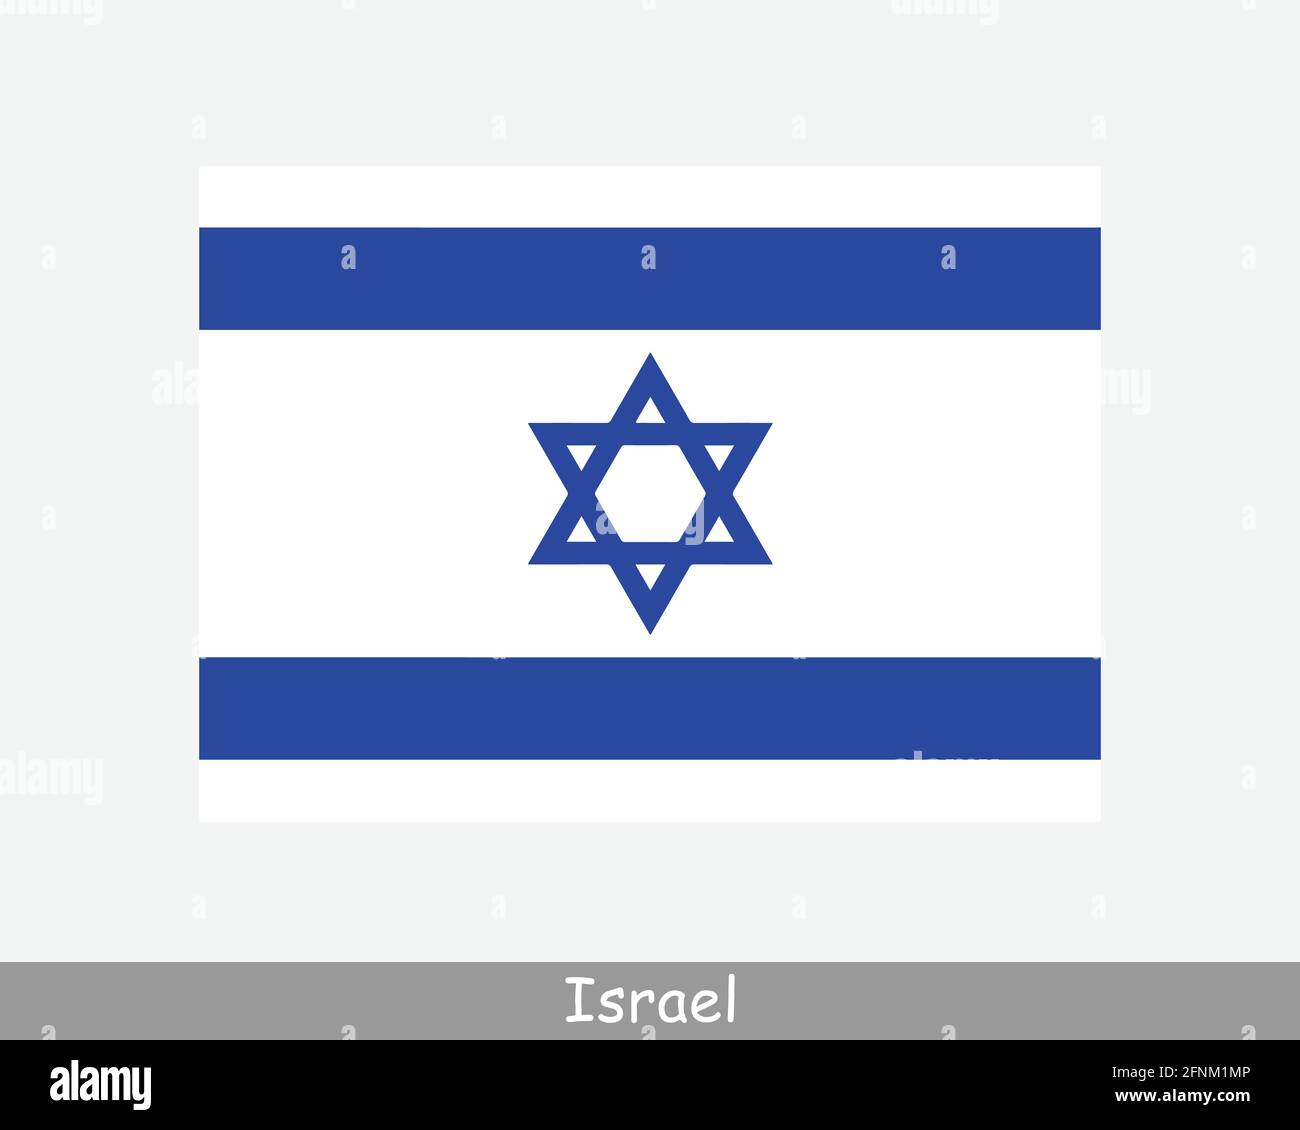 Nationale Flagge Israels. Israelische Landesflagge. Detailliertes Banner des Staates Israel. EPS-Vektorgrafik Datei ausschneiden Stock Vektor